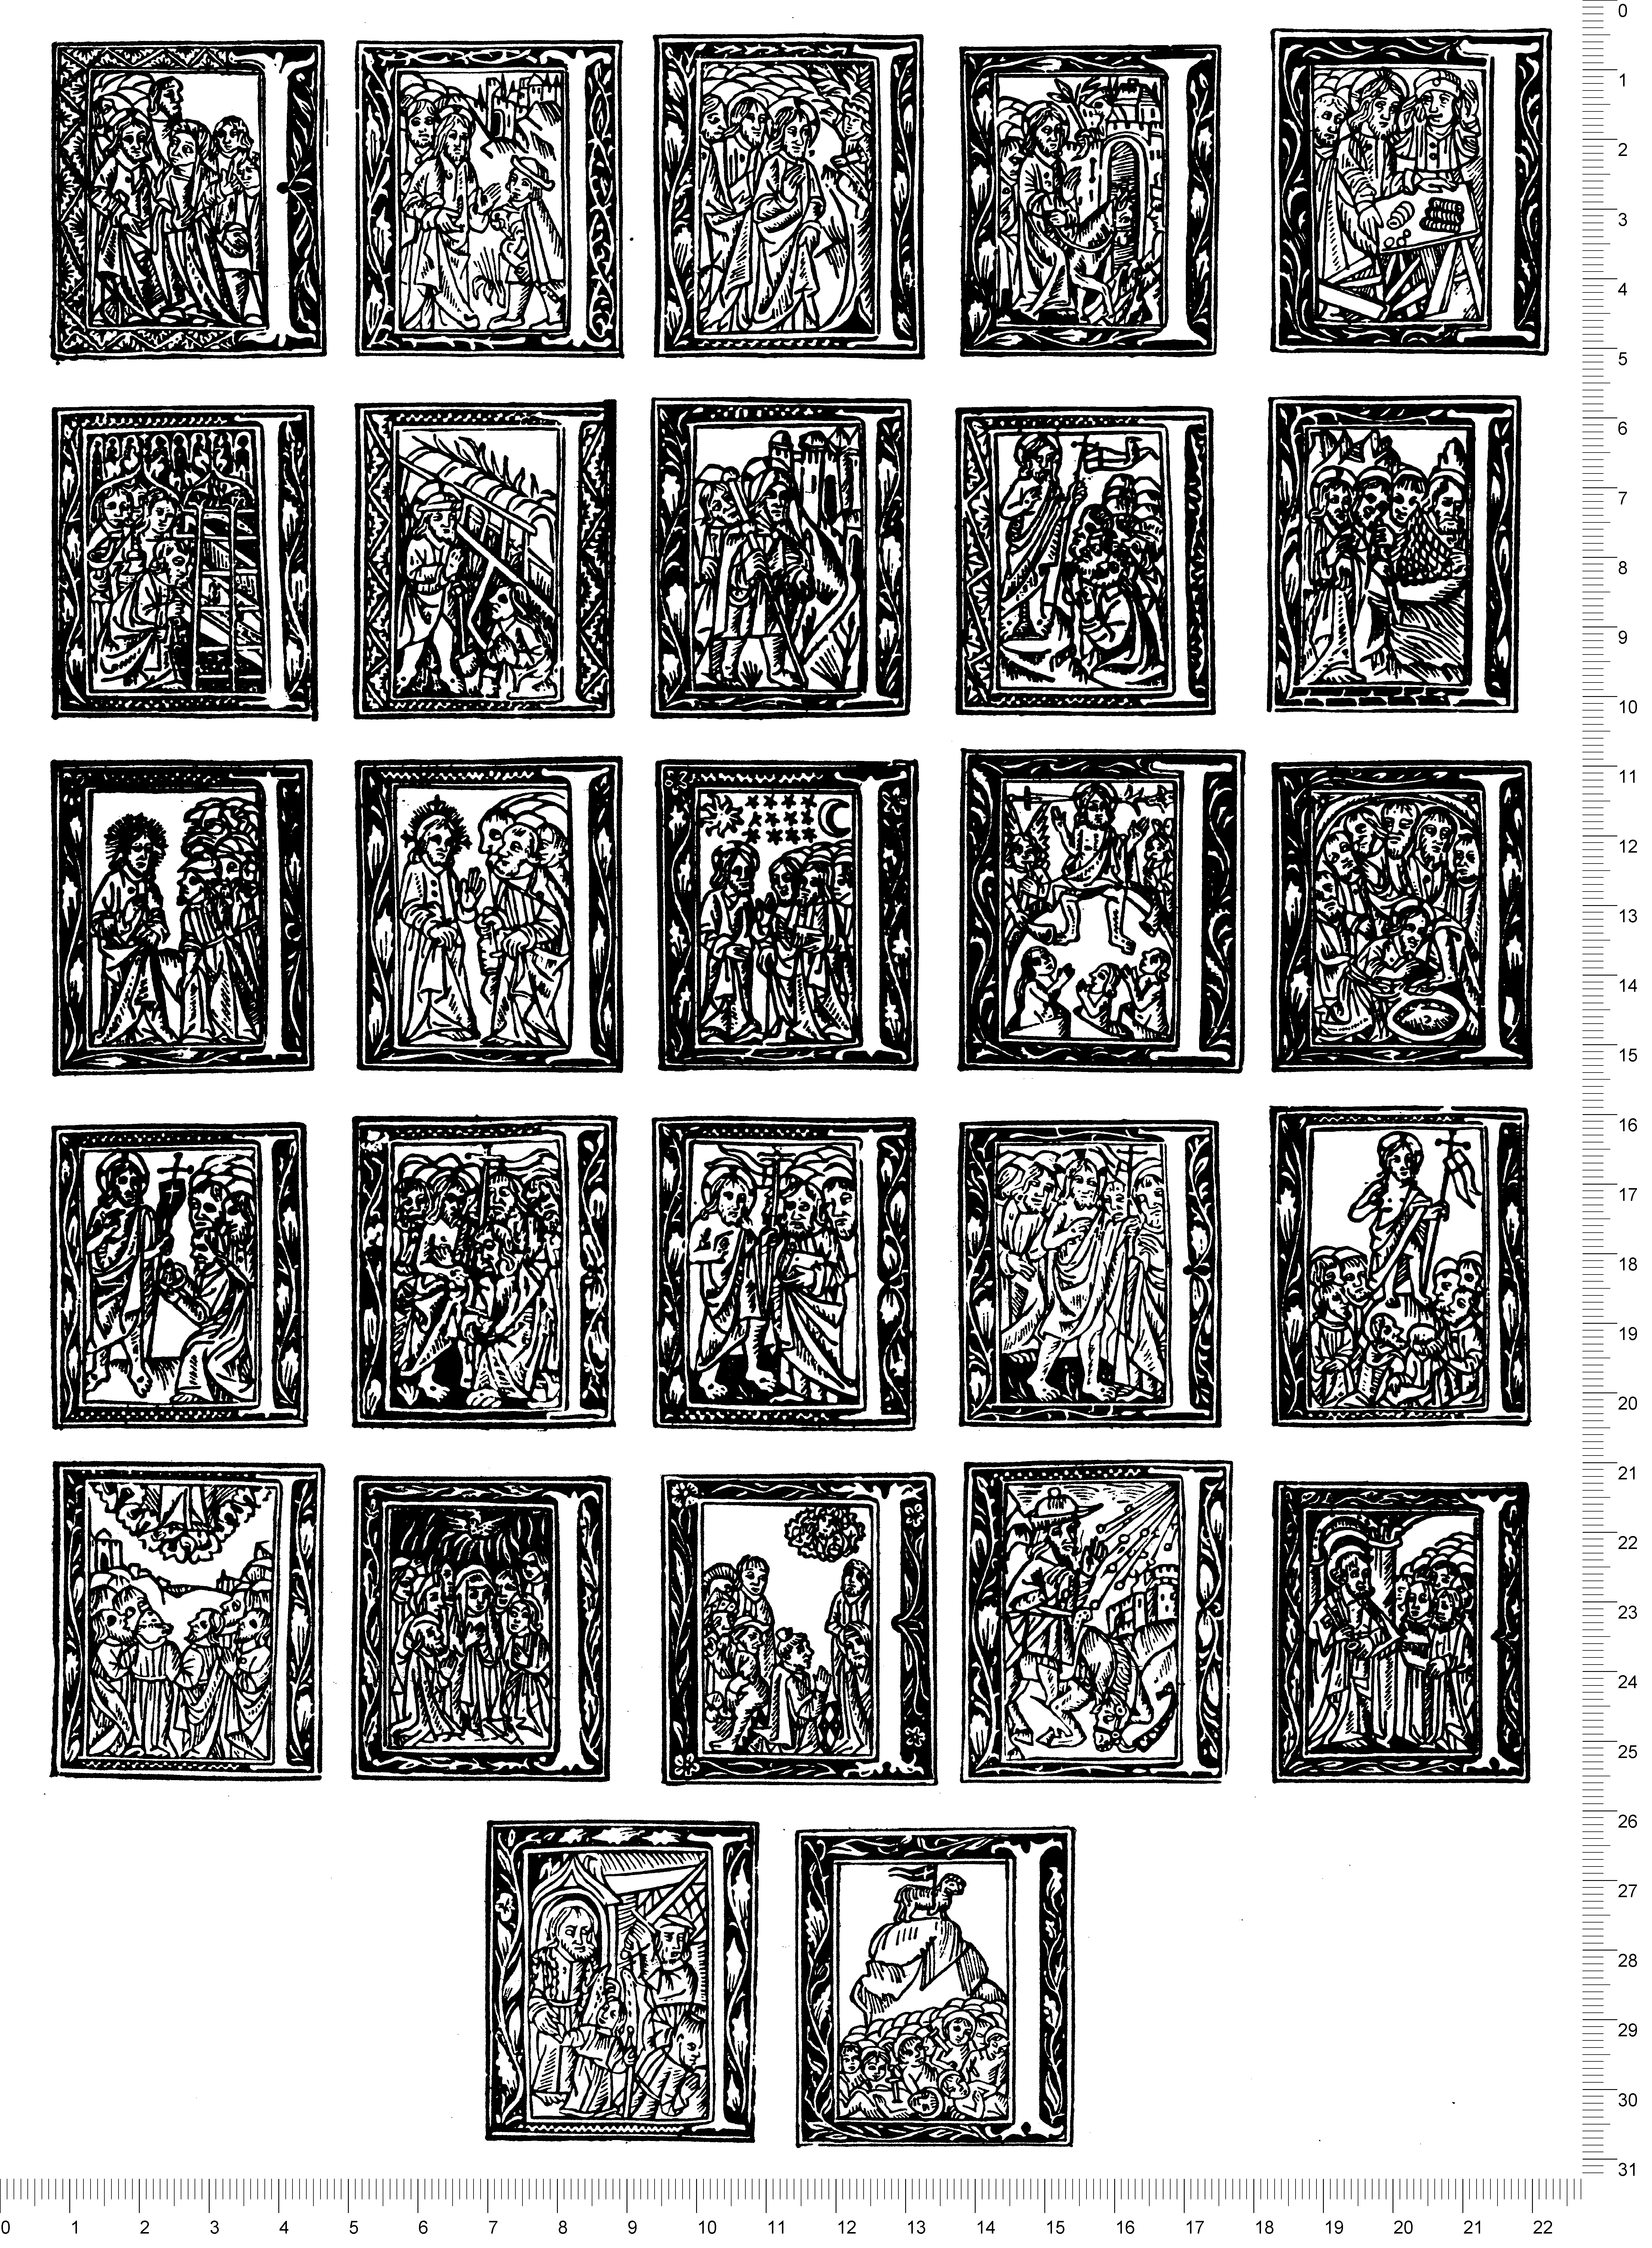 Abbildung der GfT-Tafeln vonGfT2253.1